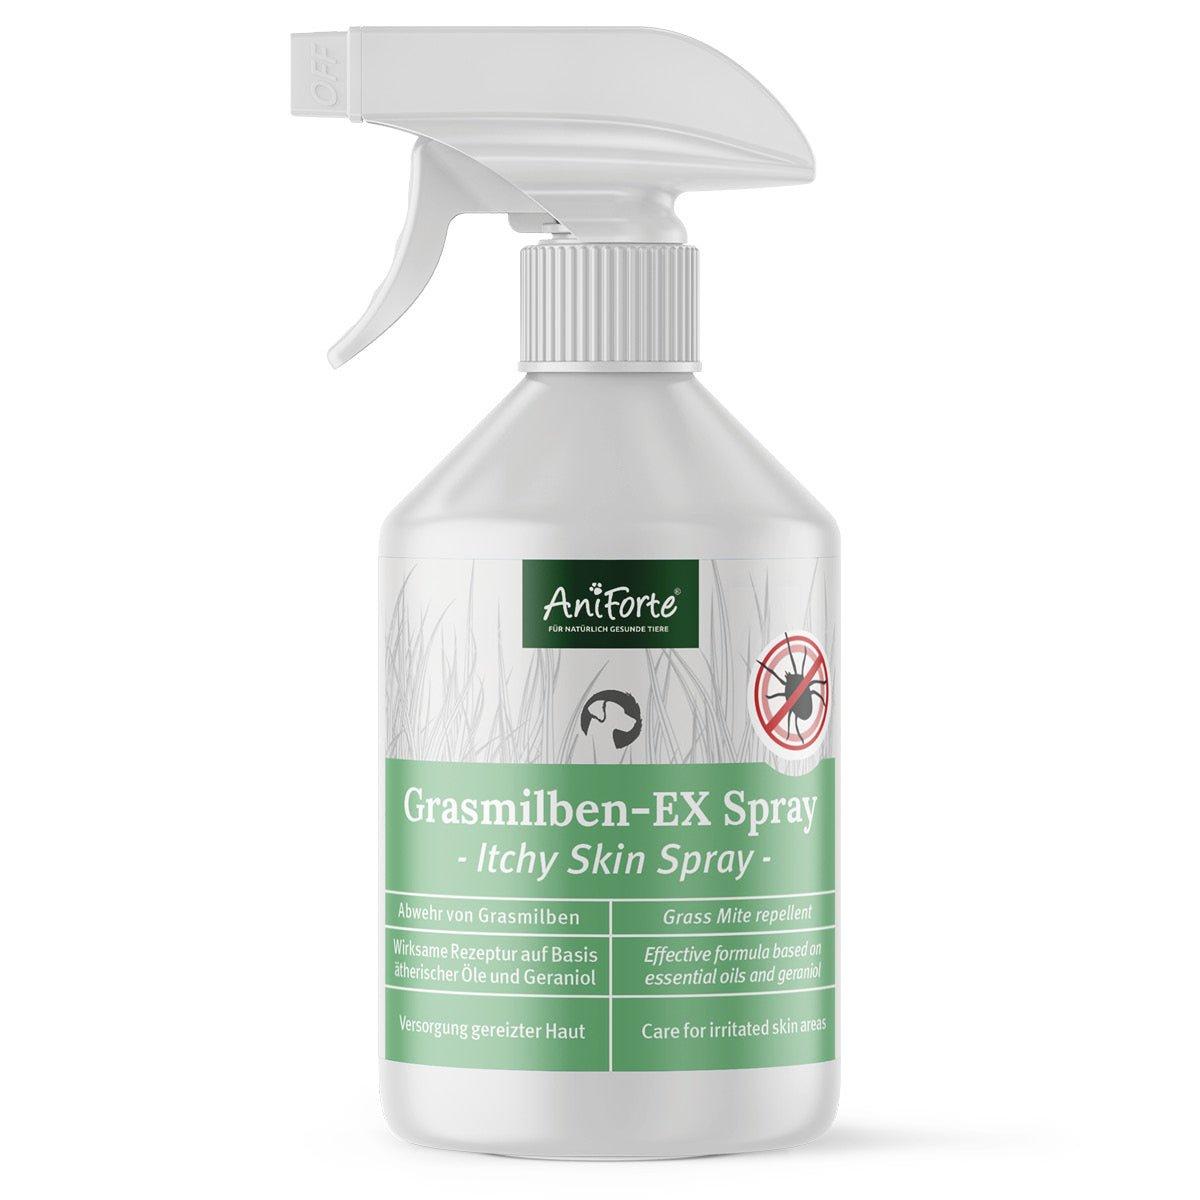 Aniforte Grasmilben-EX Spray 250 ml